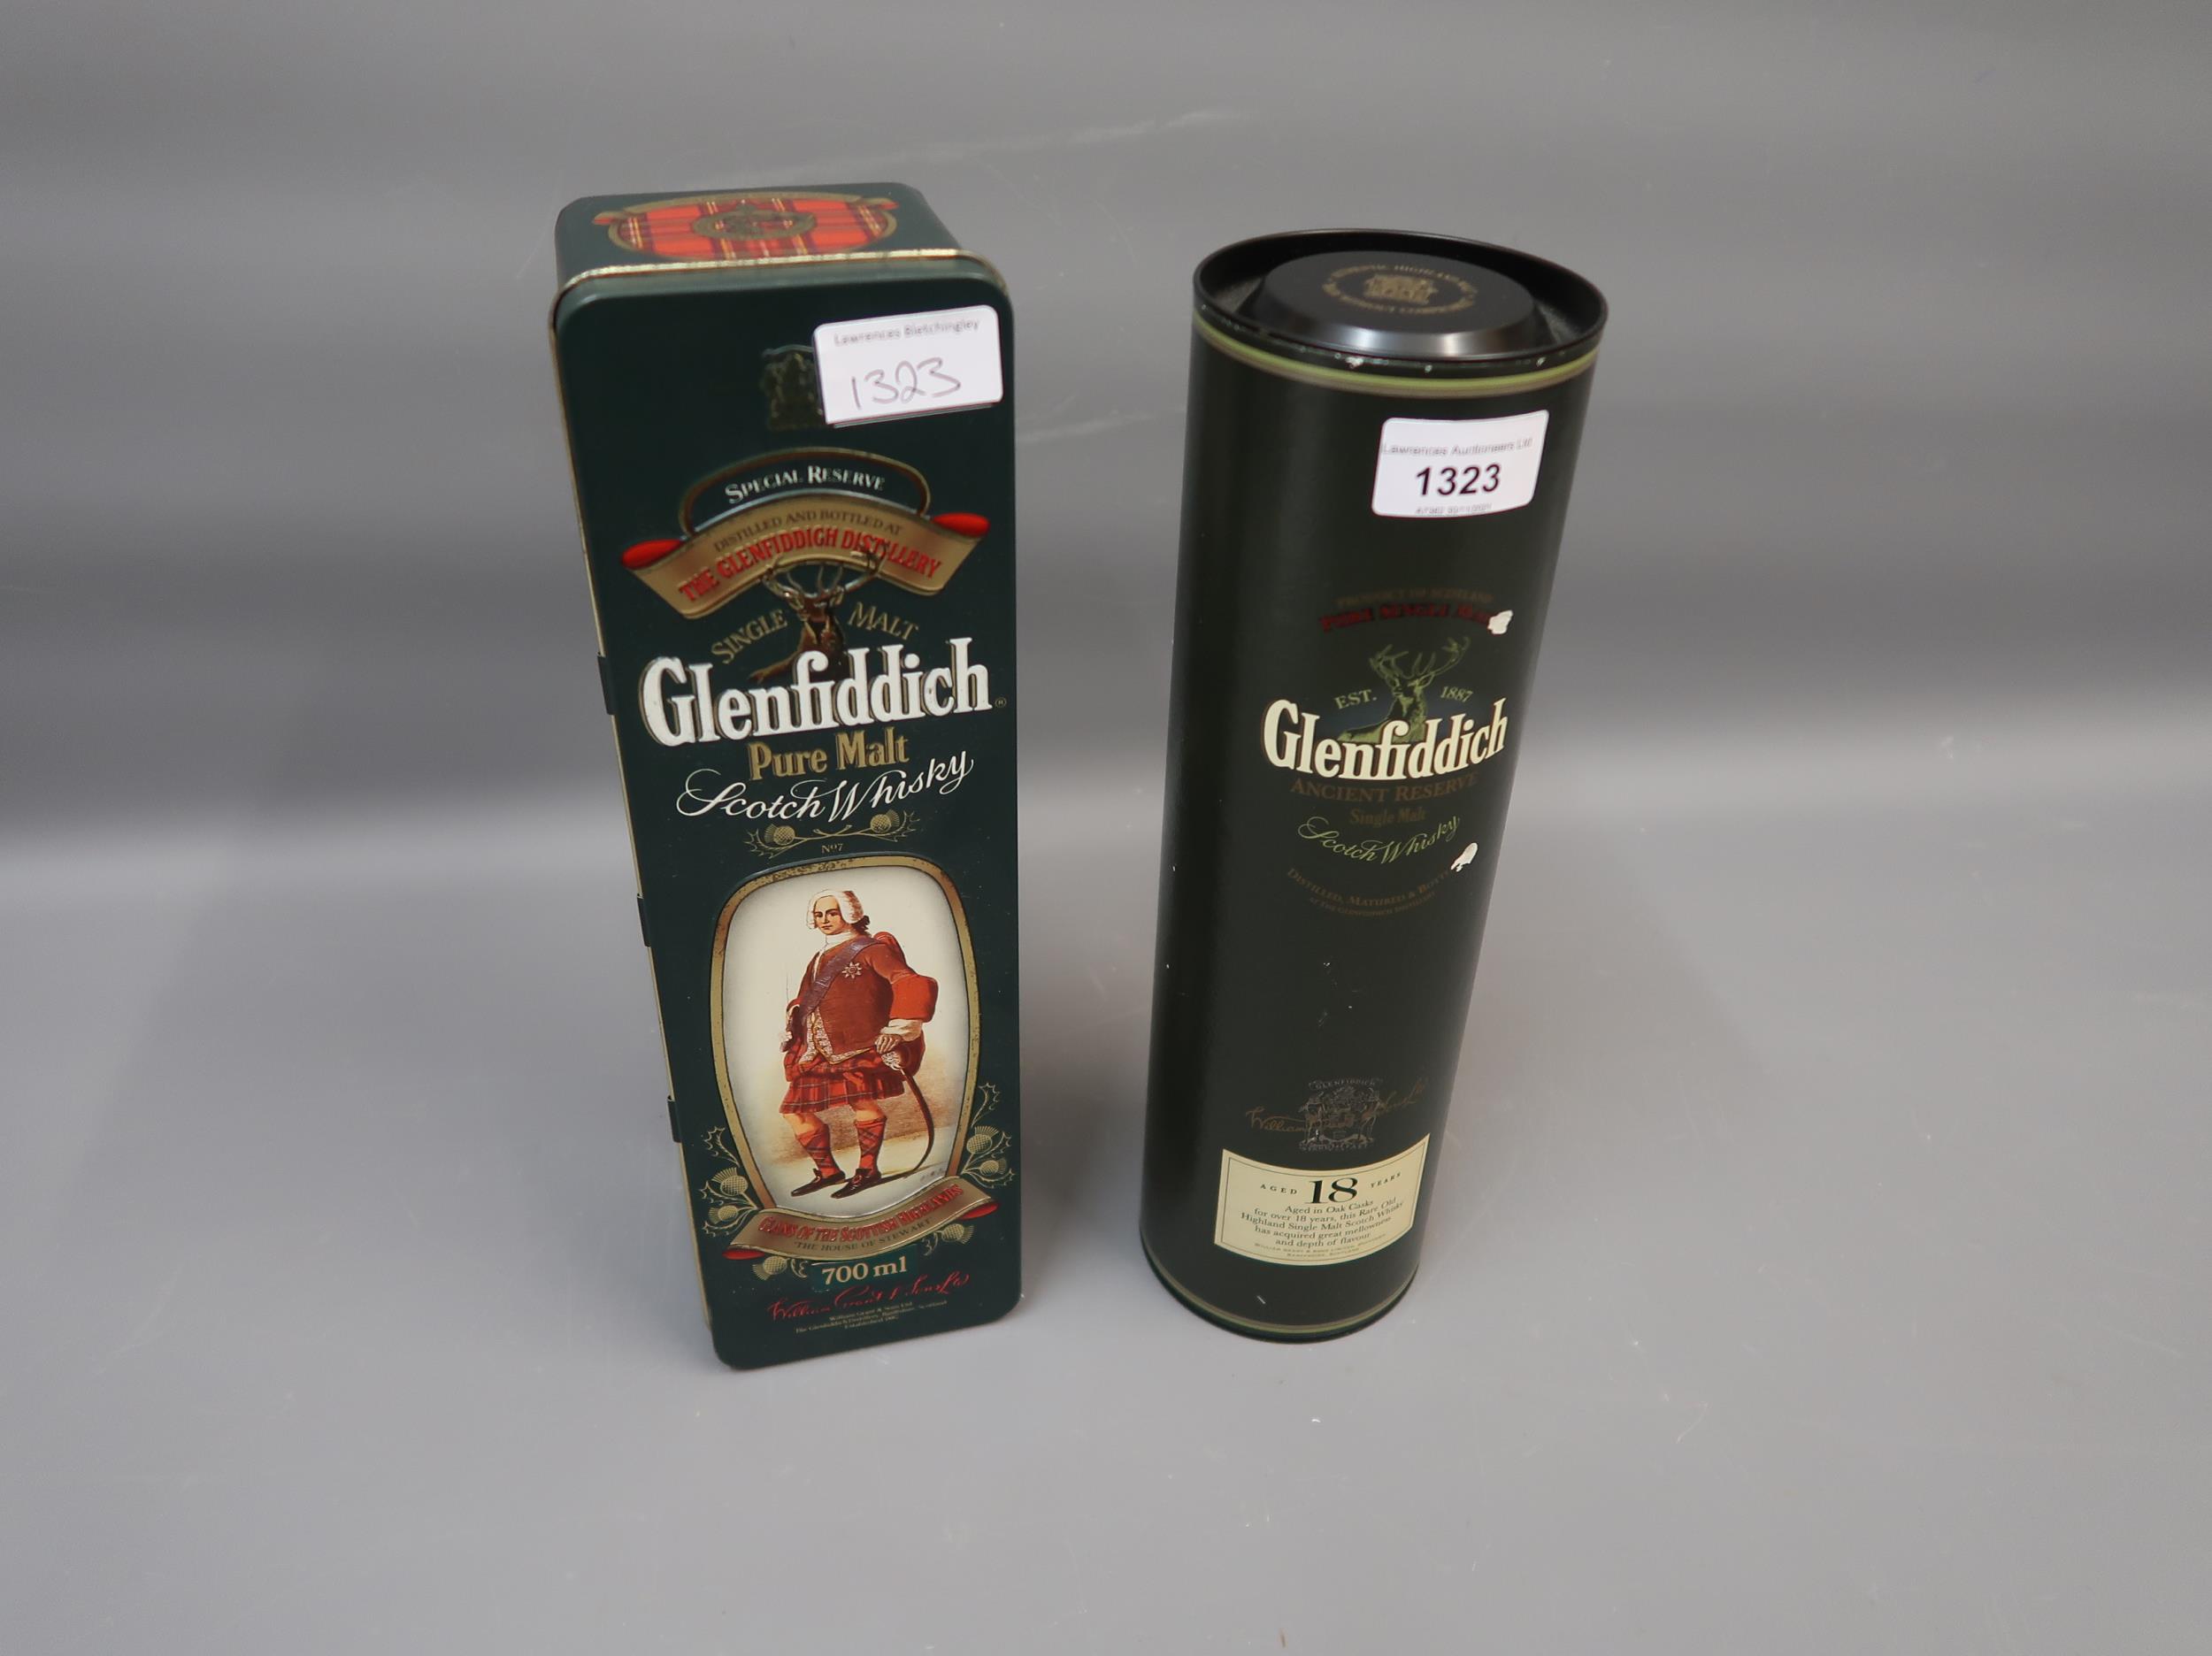 Glenfiddich pure single malt Scotch Whisky and another Glenfiddich pure malt Scotch Whisky, both